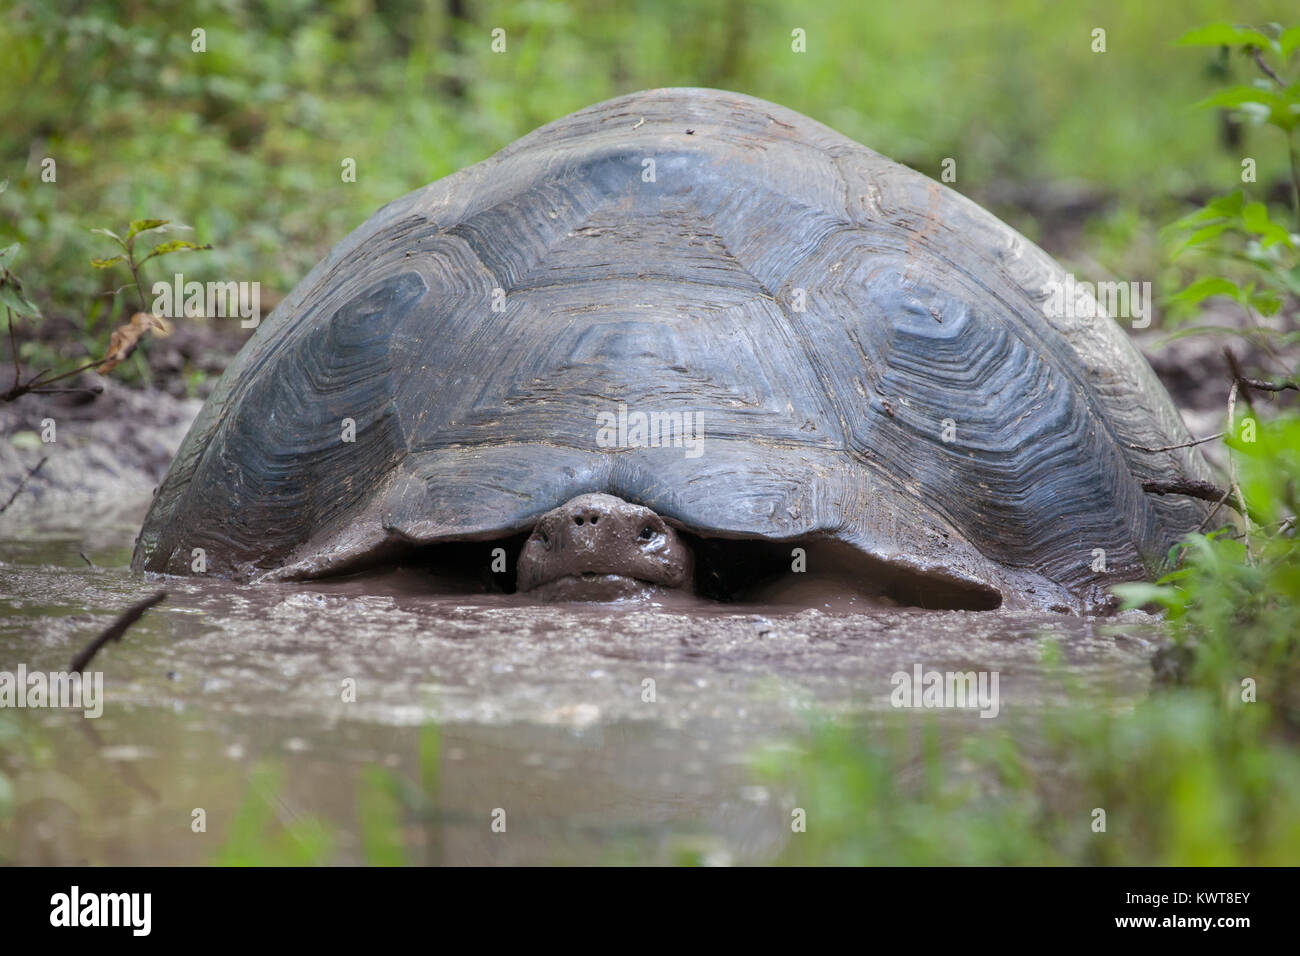 A Galapagos giant tortoise (Chelonoidis nigra porteri) in a mud wallow (Santa Cruz island, Galapagos). Stock Photo